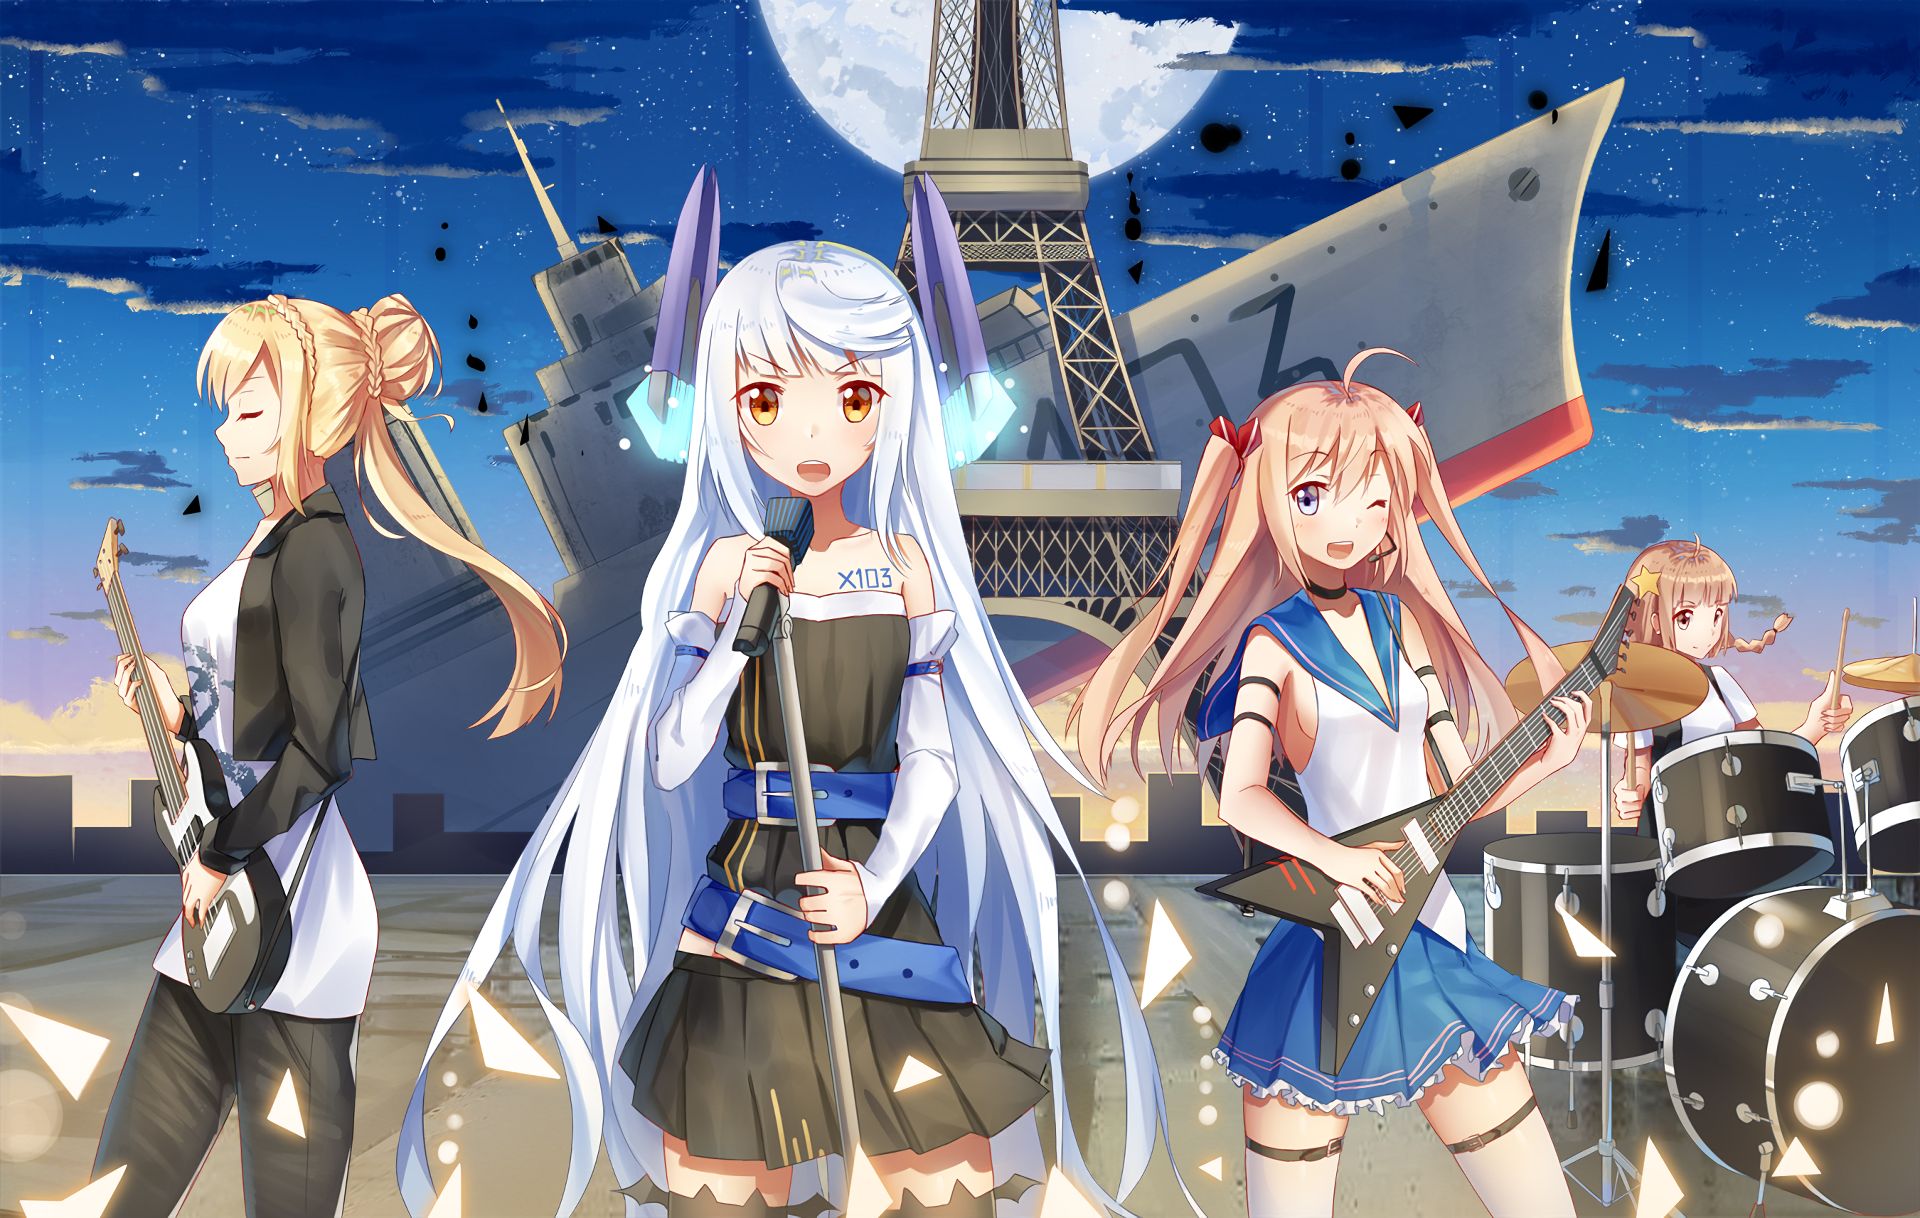 Baixar papel de parede para celular de Anime, Garotas Do Navio De Guerra gratuito.